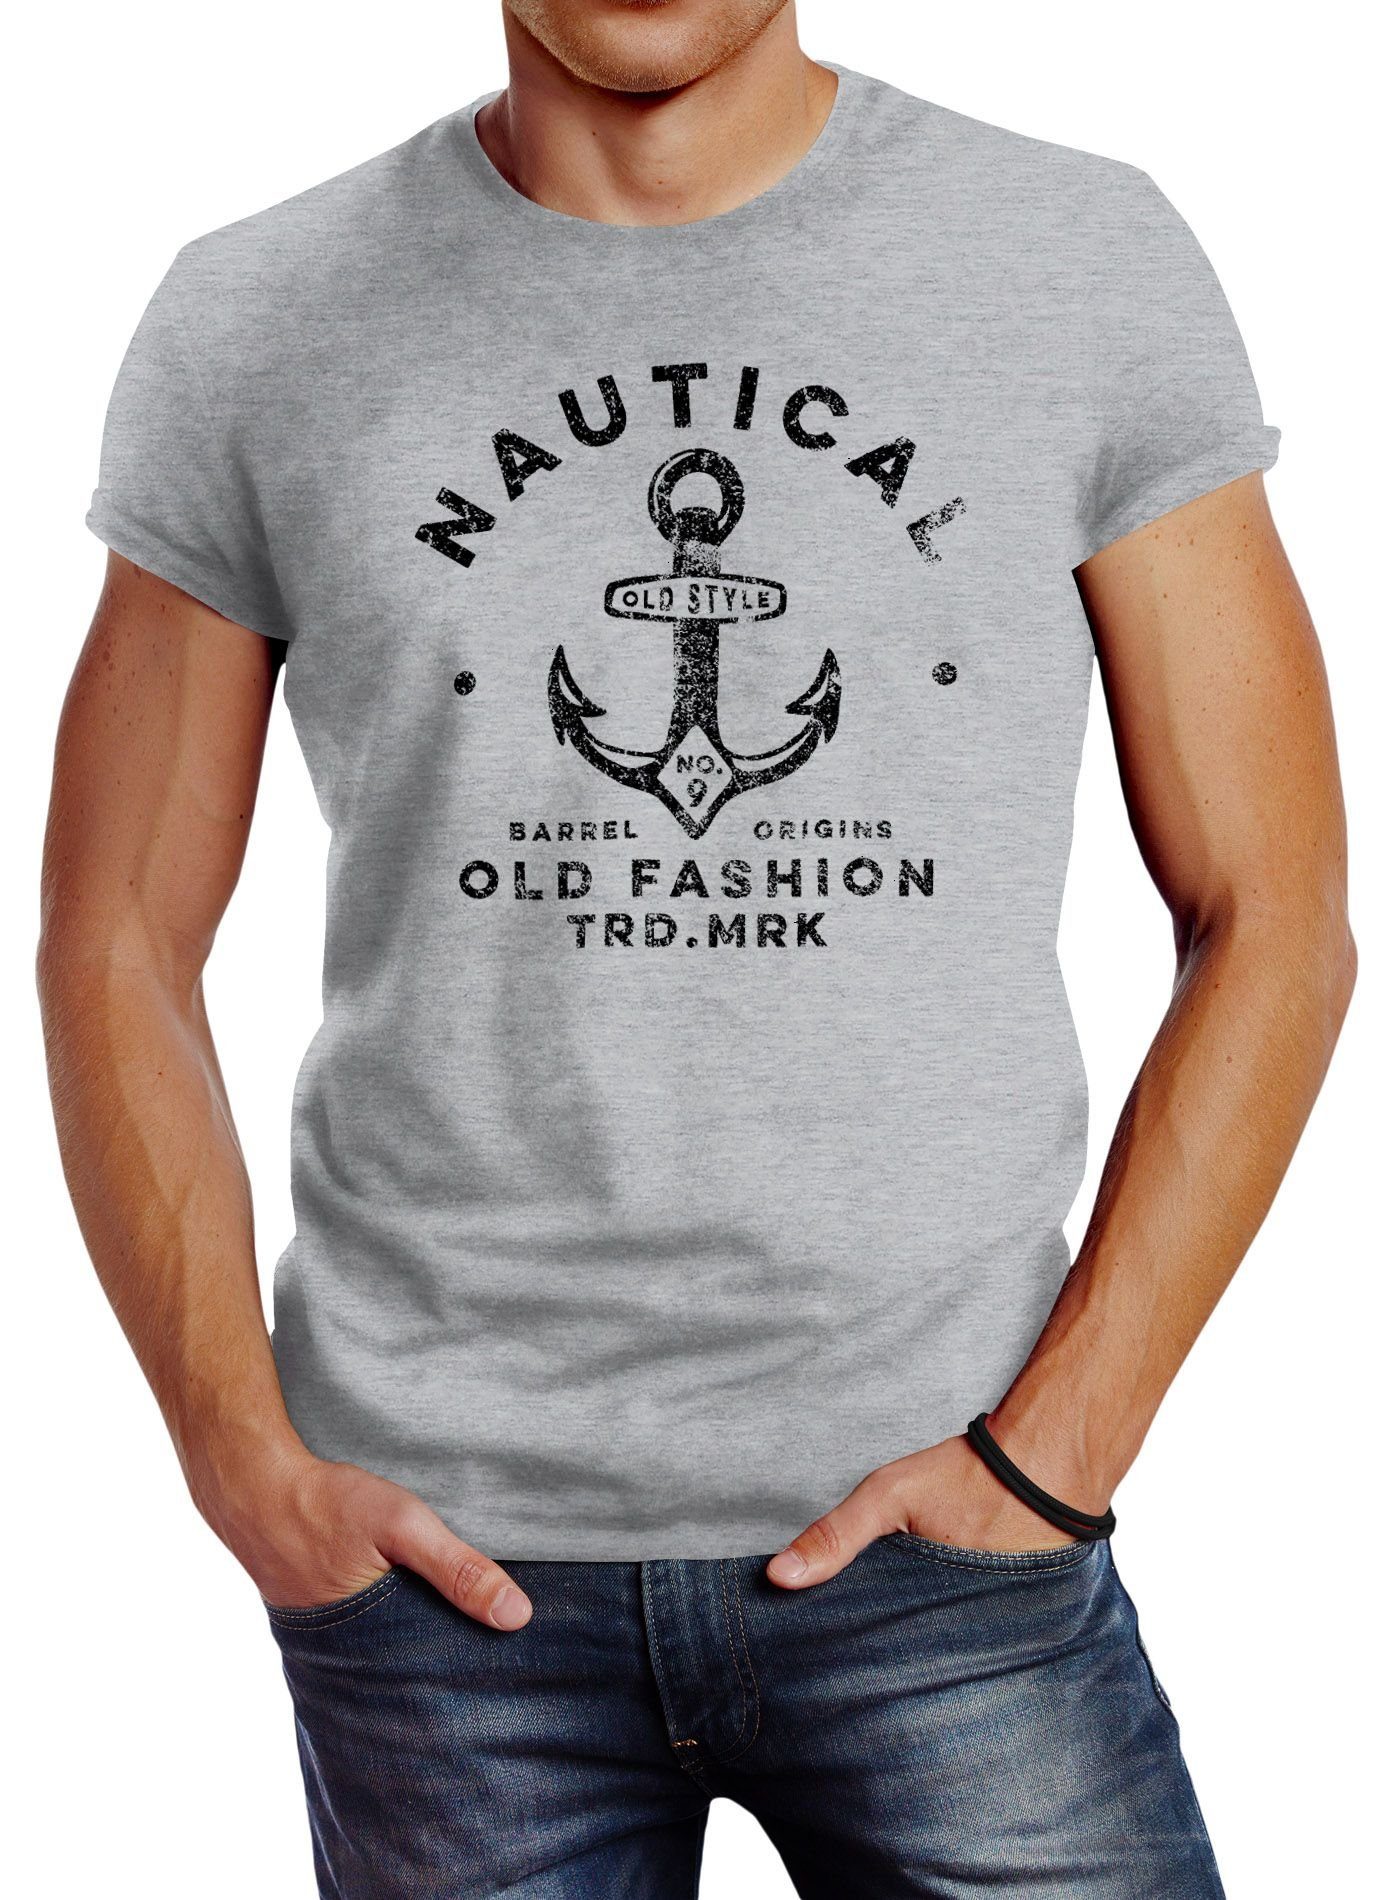 Neverless Print-Shirt Neverless® grau Anker Nautical Streetstyle Retro Design Fashion Herren Motiv T-Shirt Fashion Print mit Schriftzug Old